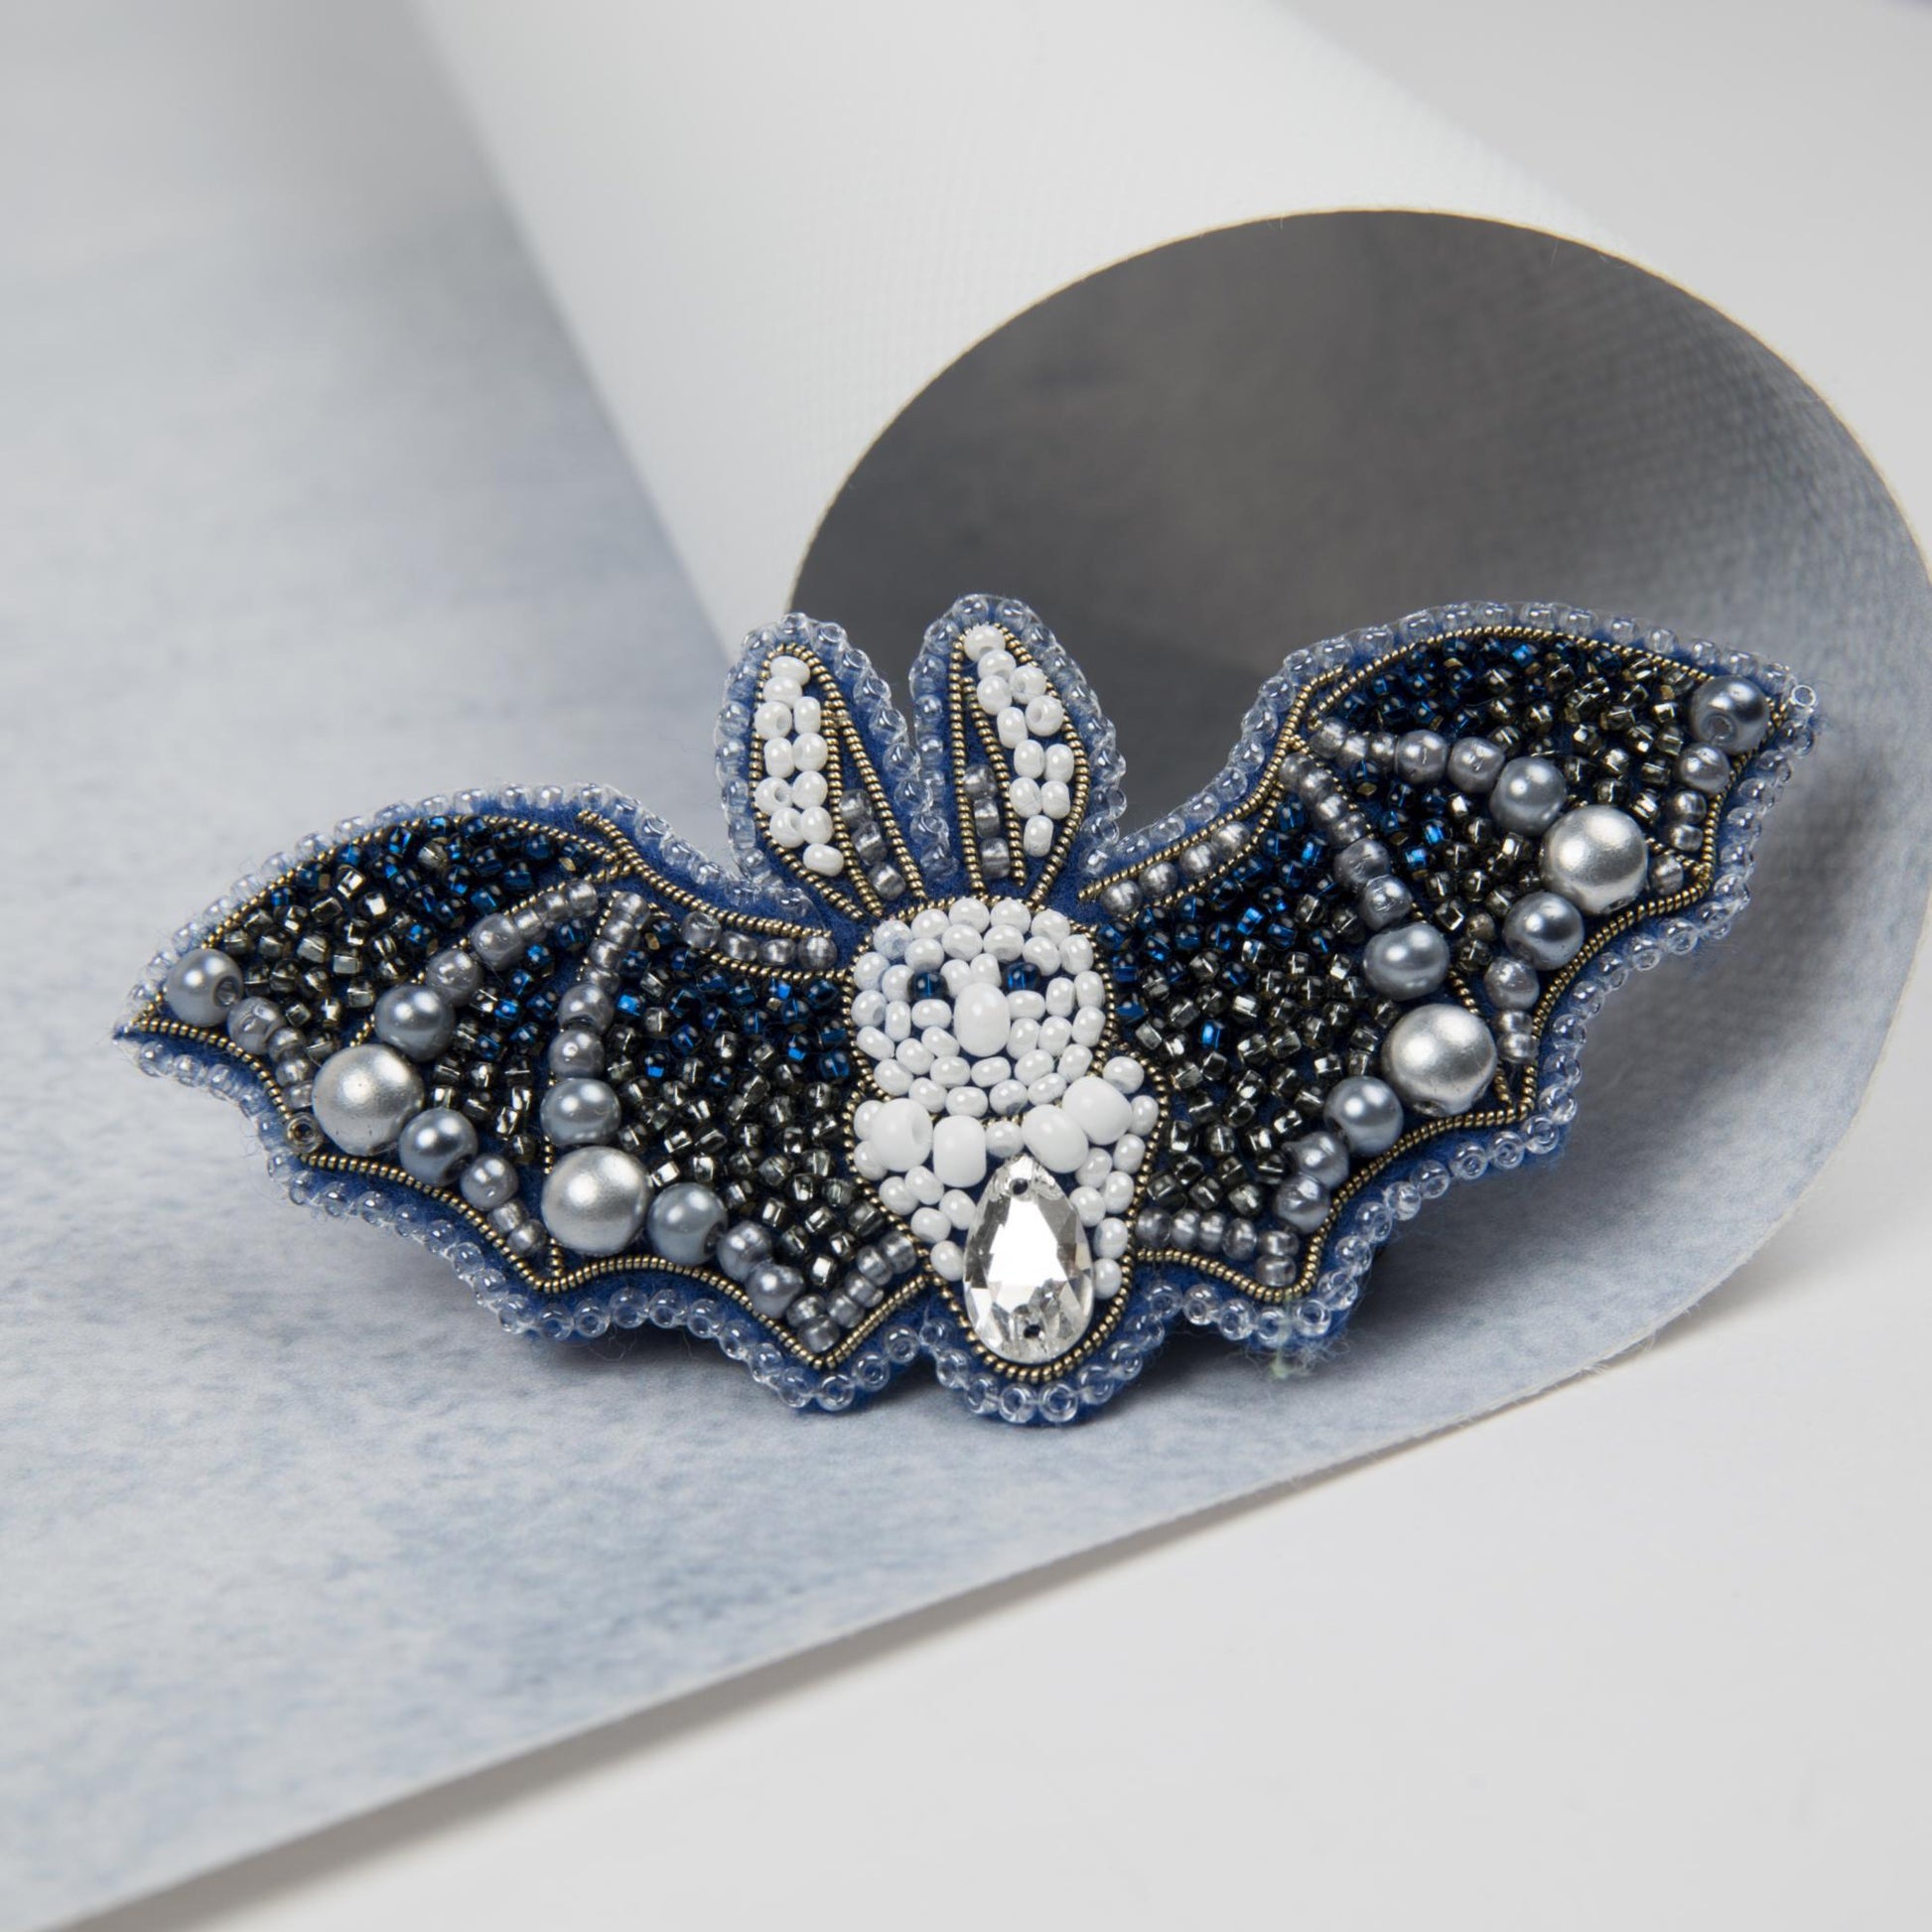 BP-279 Beadwork kit for creating broоch Crystal Art "Bat" - Leo Hobby